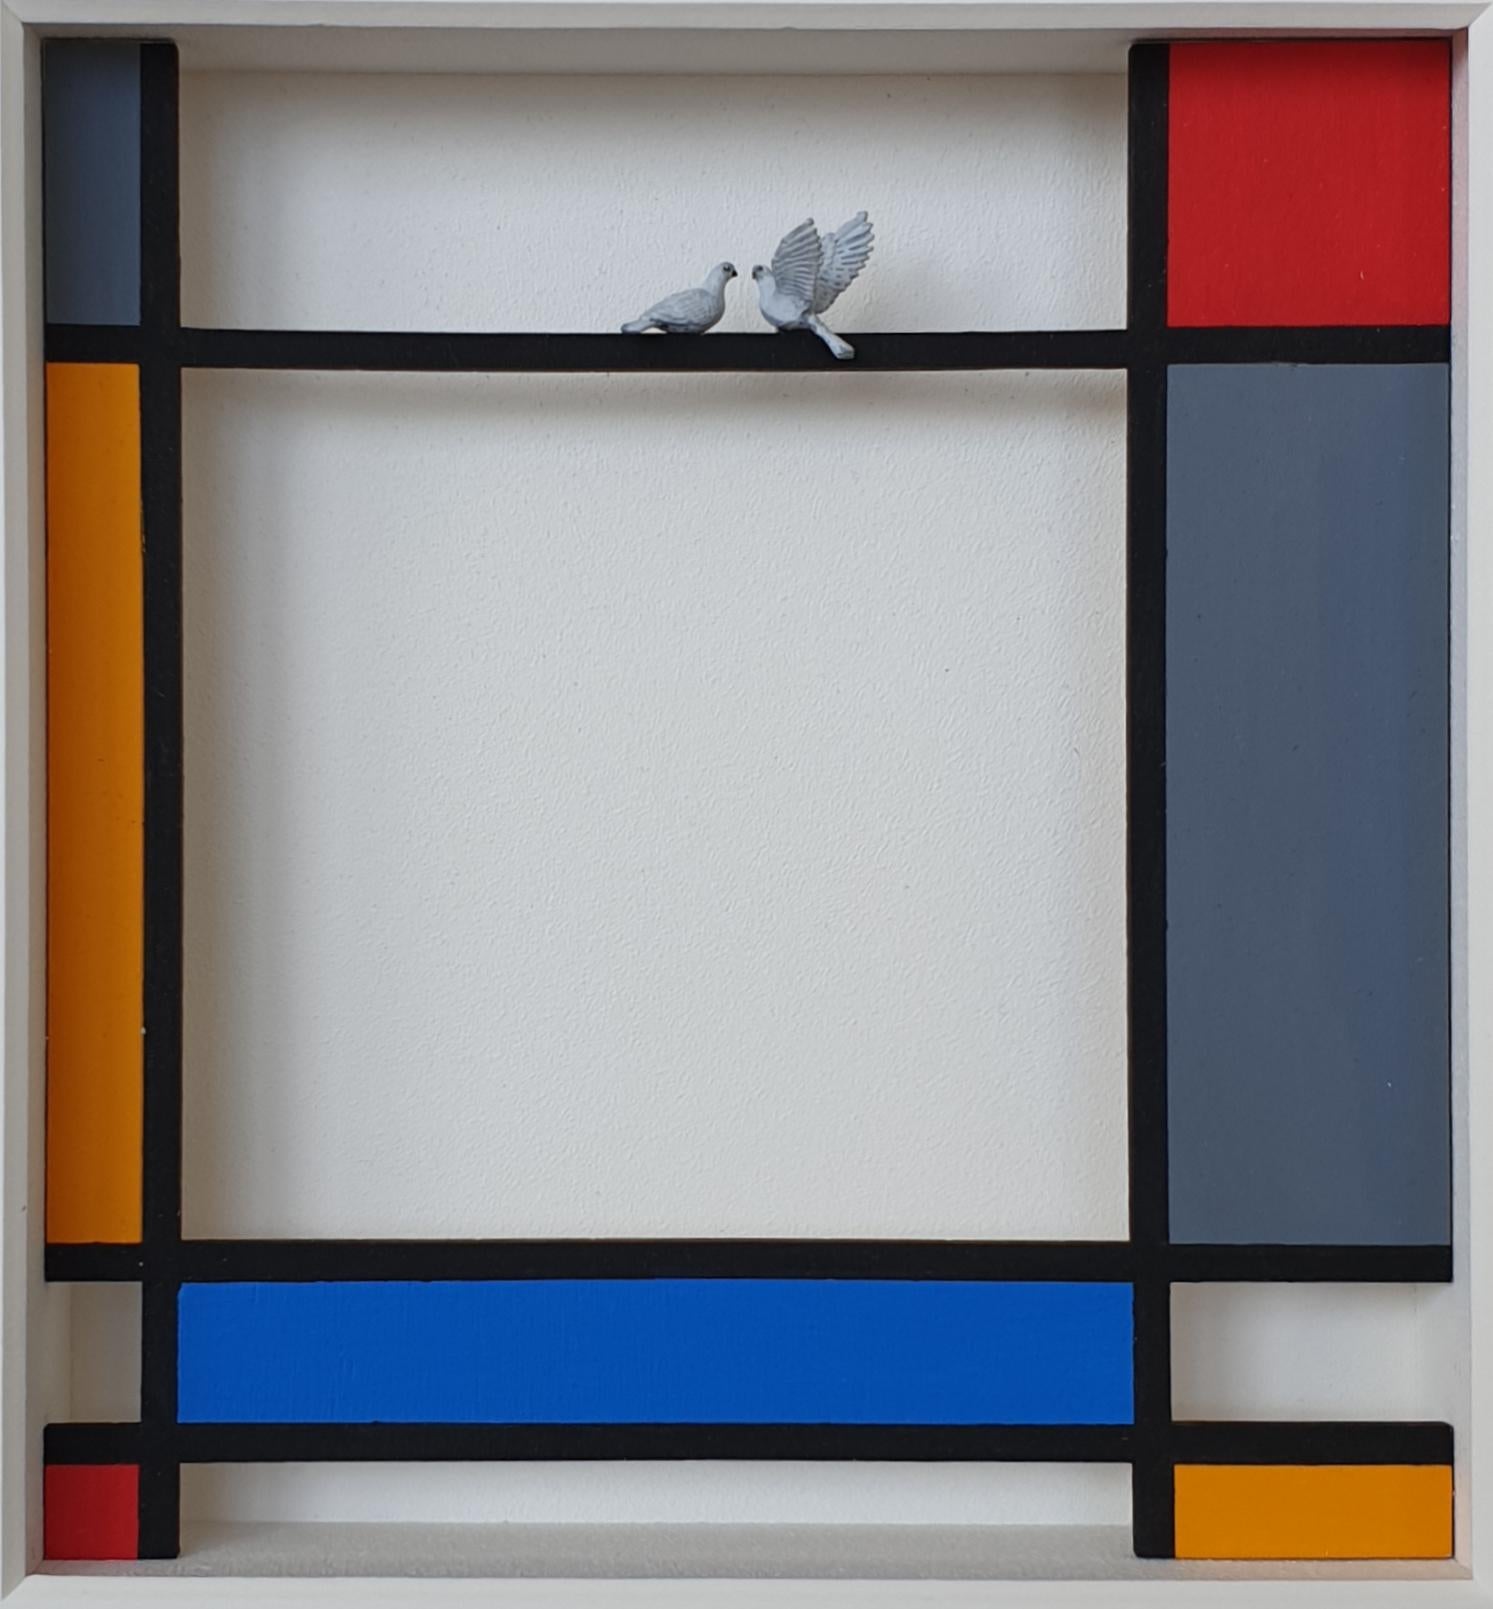 Hommage à Mondrian - Perchoir - œuvres d'art contemporain, design hommage au maître hollandais - Mixed Media Art de Volker Kuhn